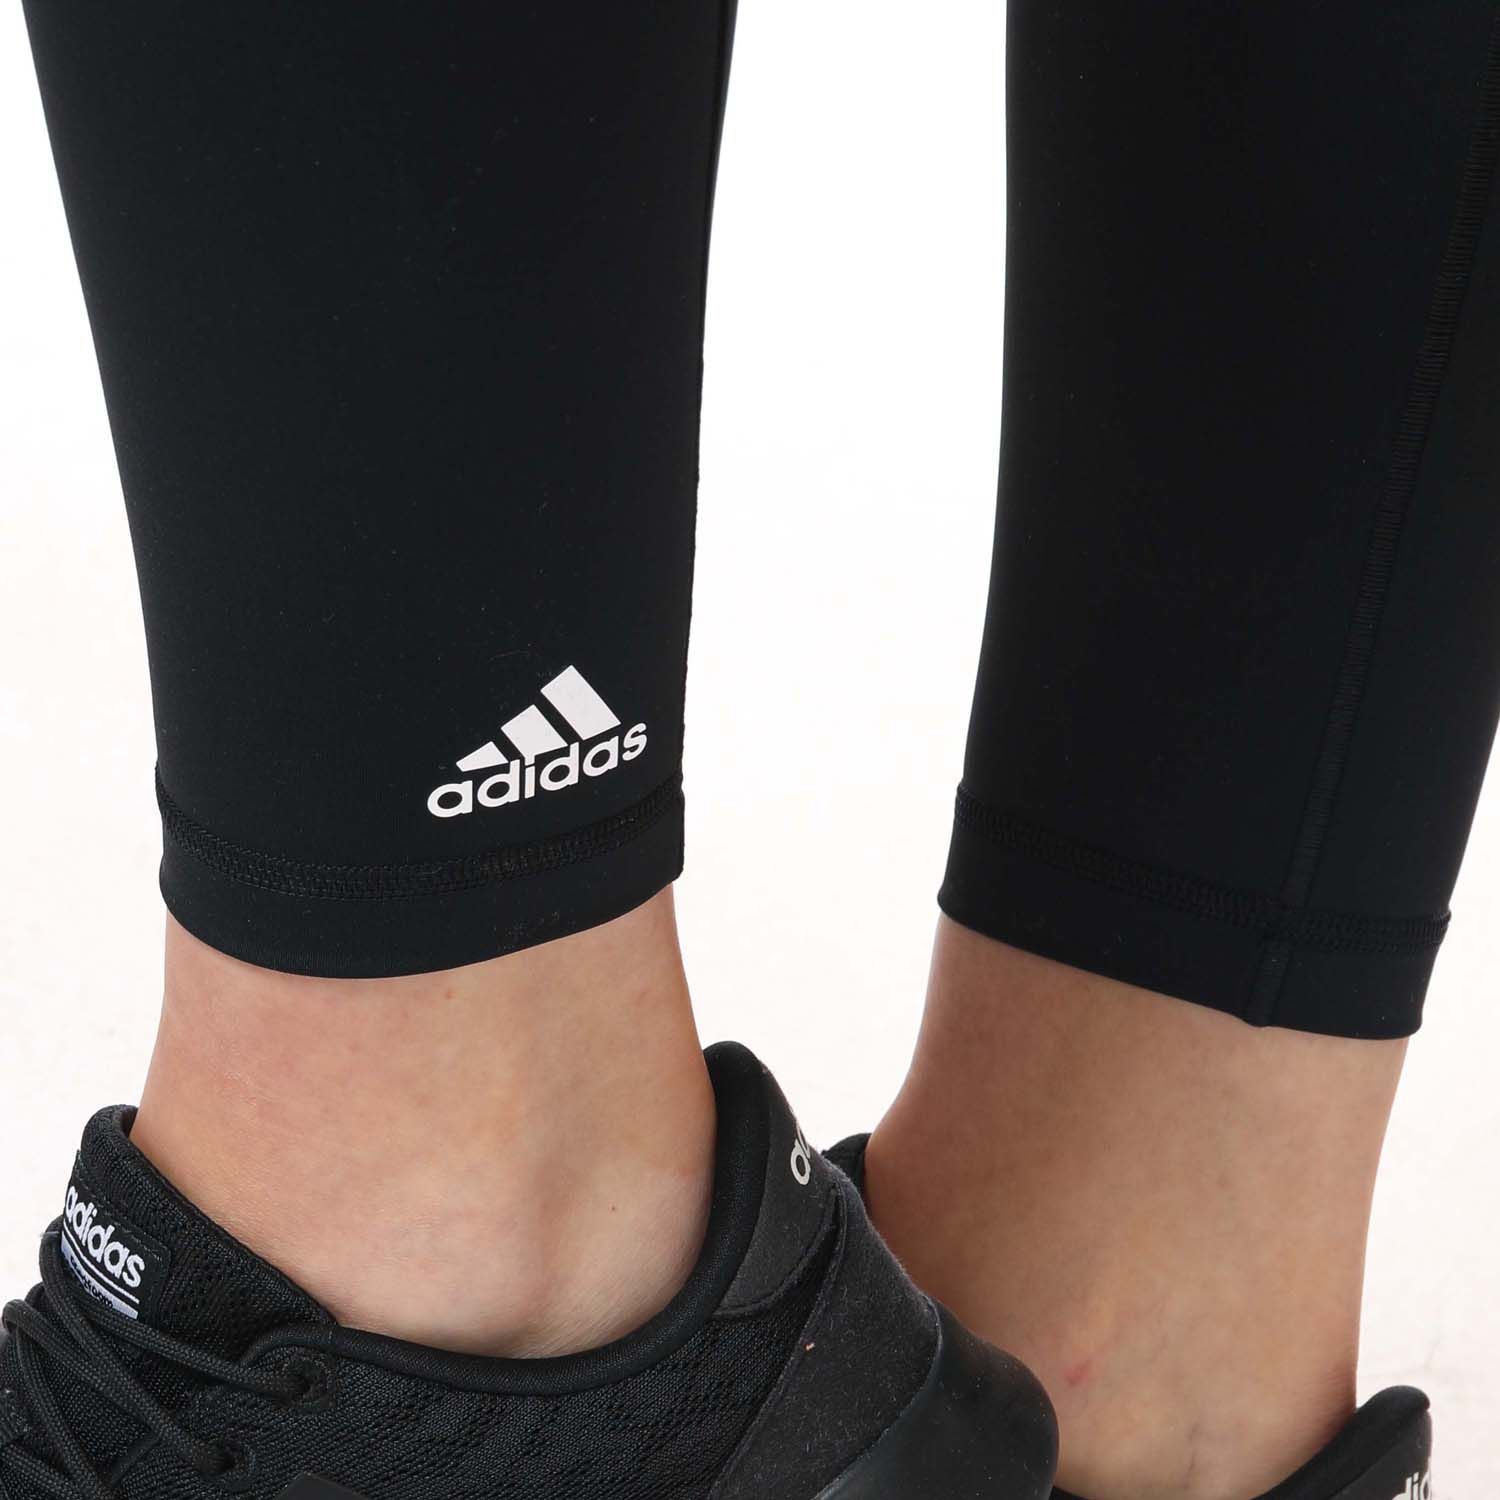 Womens adidas Believe This 2.0 7-8 Leggings in black.- High rise.- Mesh gusset and inner waist pocket.- Seven-eighth length.- Interlock.- Moisture-absorbing AEROREADY.- Tight fit.- Main Material: 64% Nylon  36% Elastane. Machine washable.- Ref: FJ7187